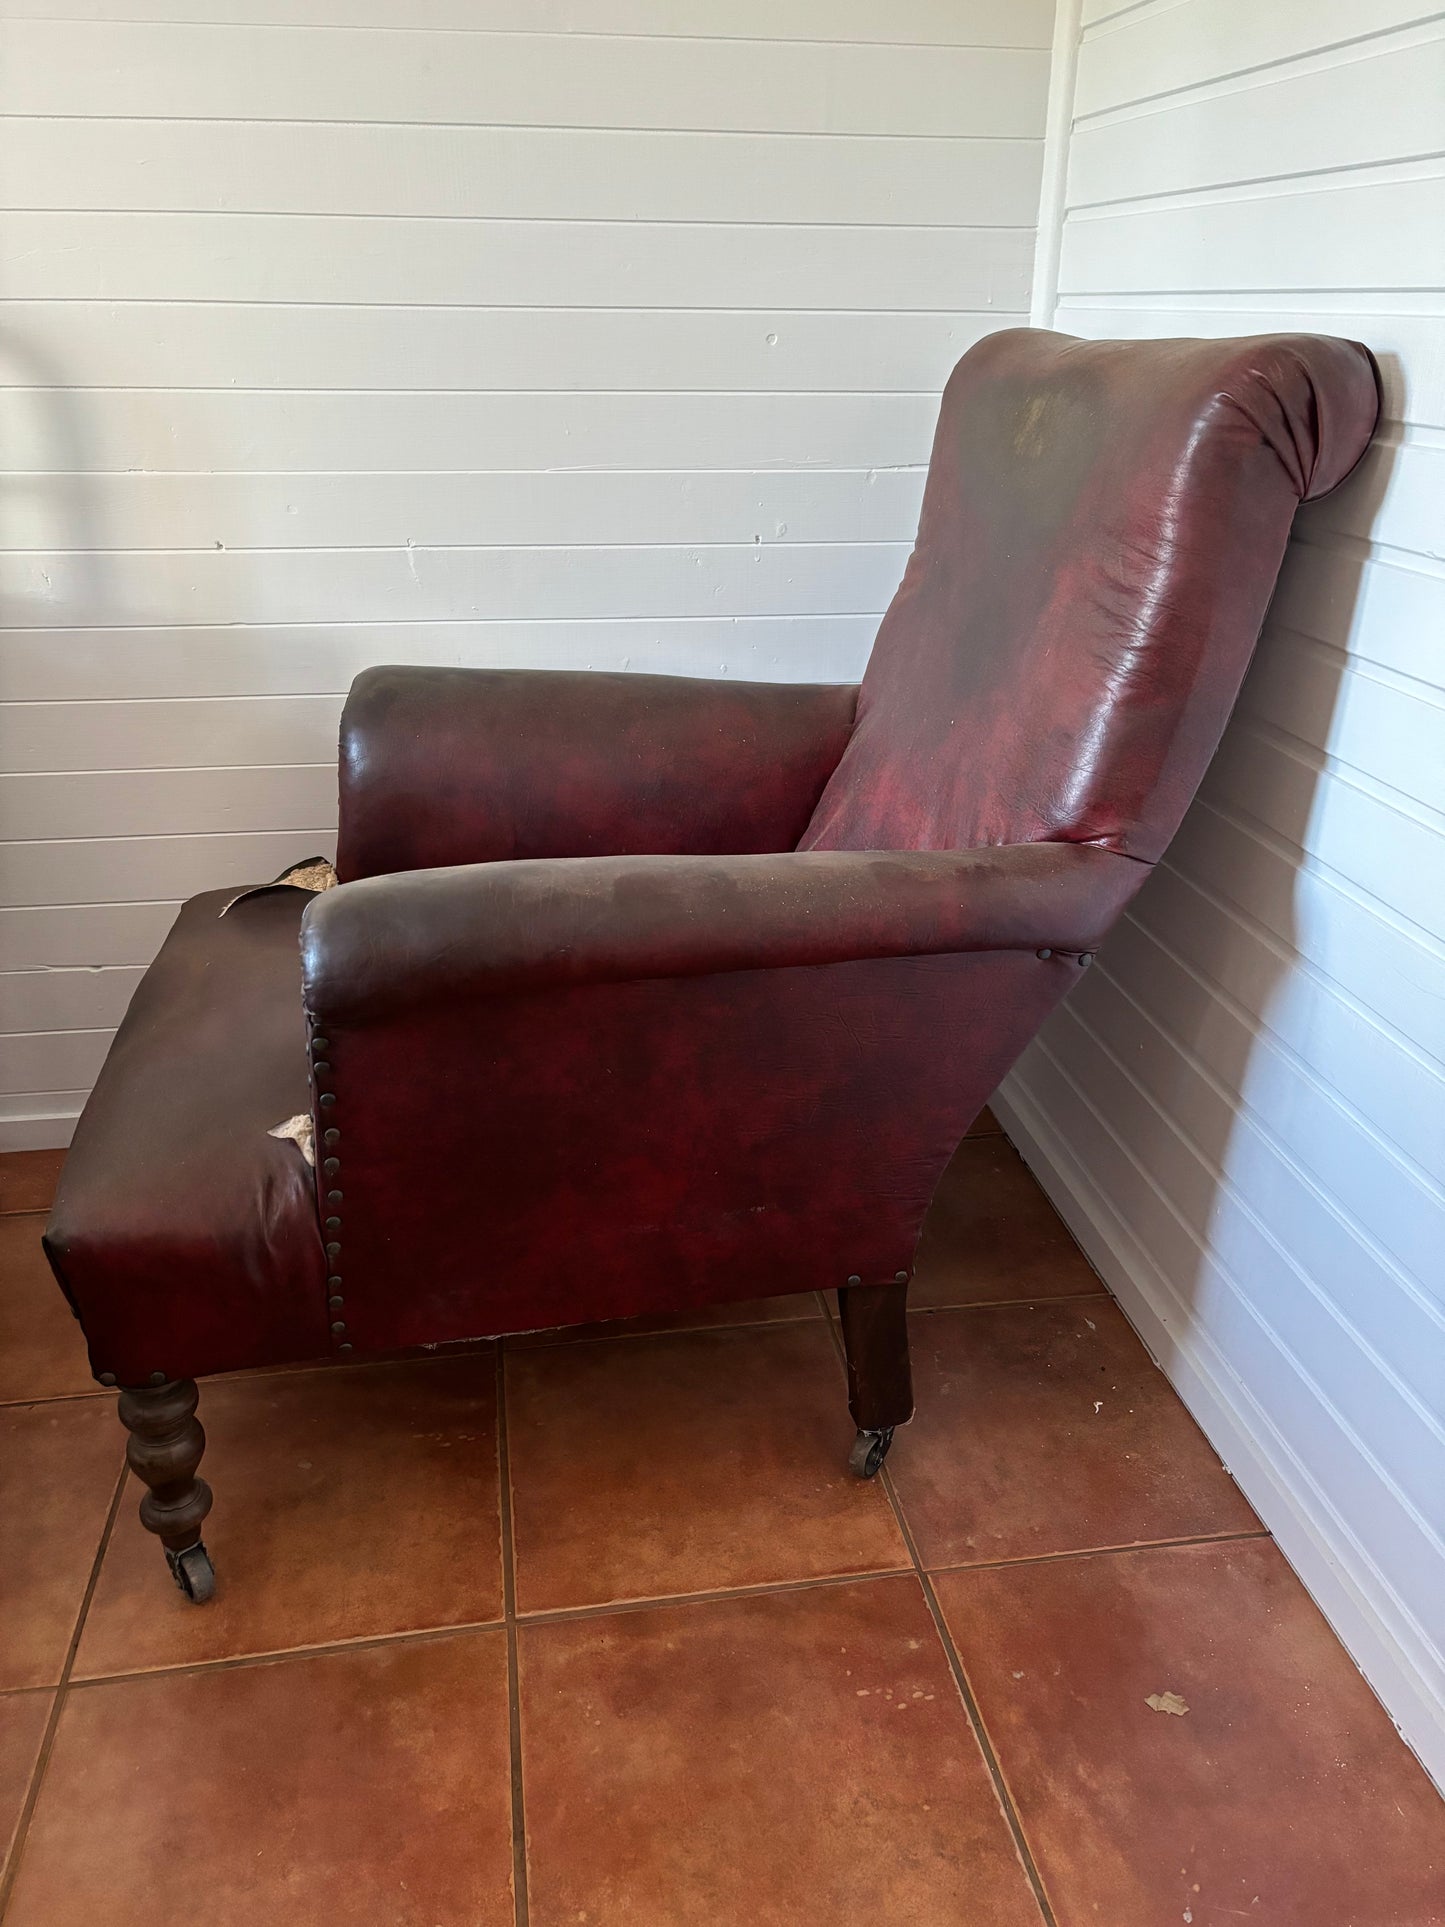 Original Victorian Armchair ready for restoration